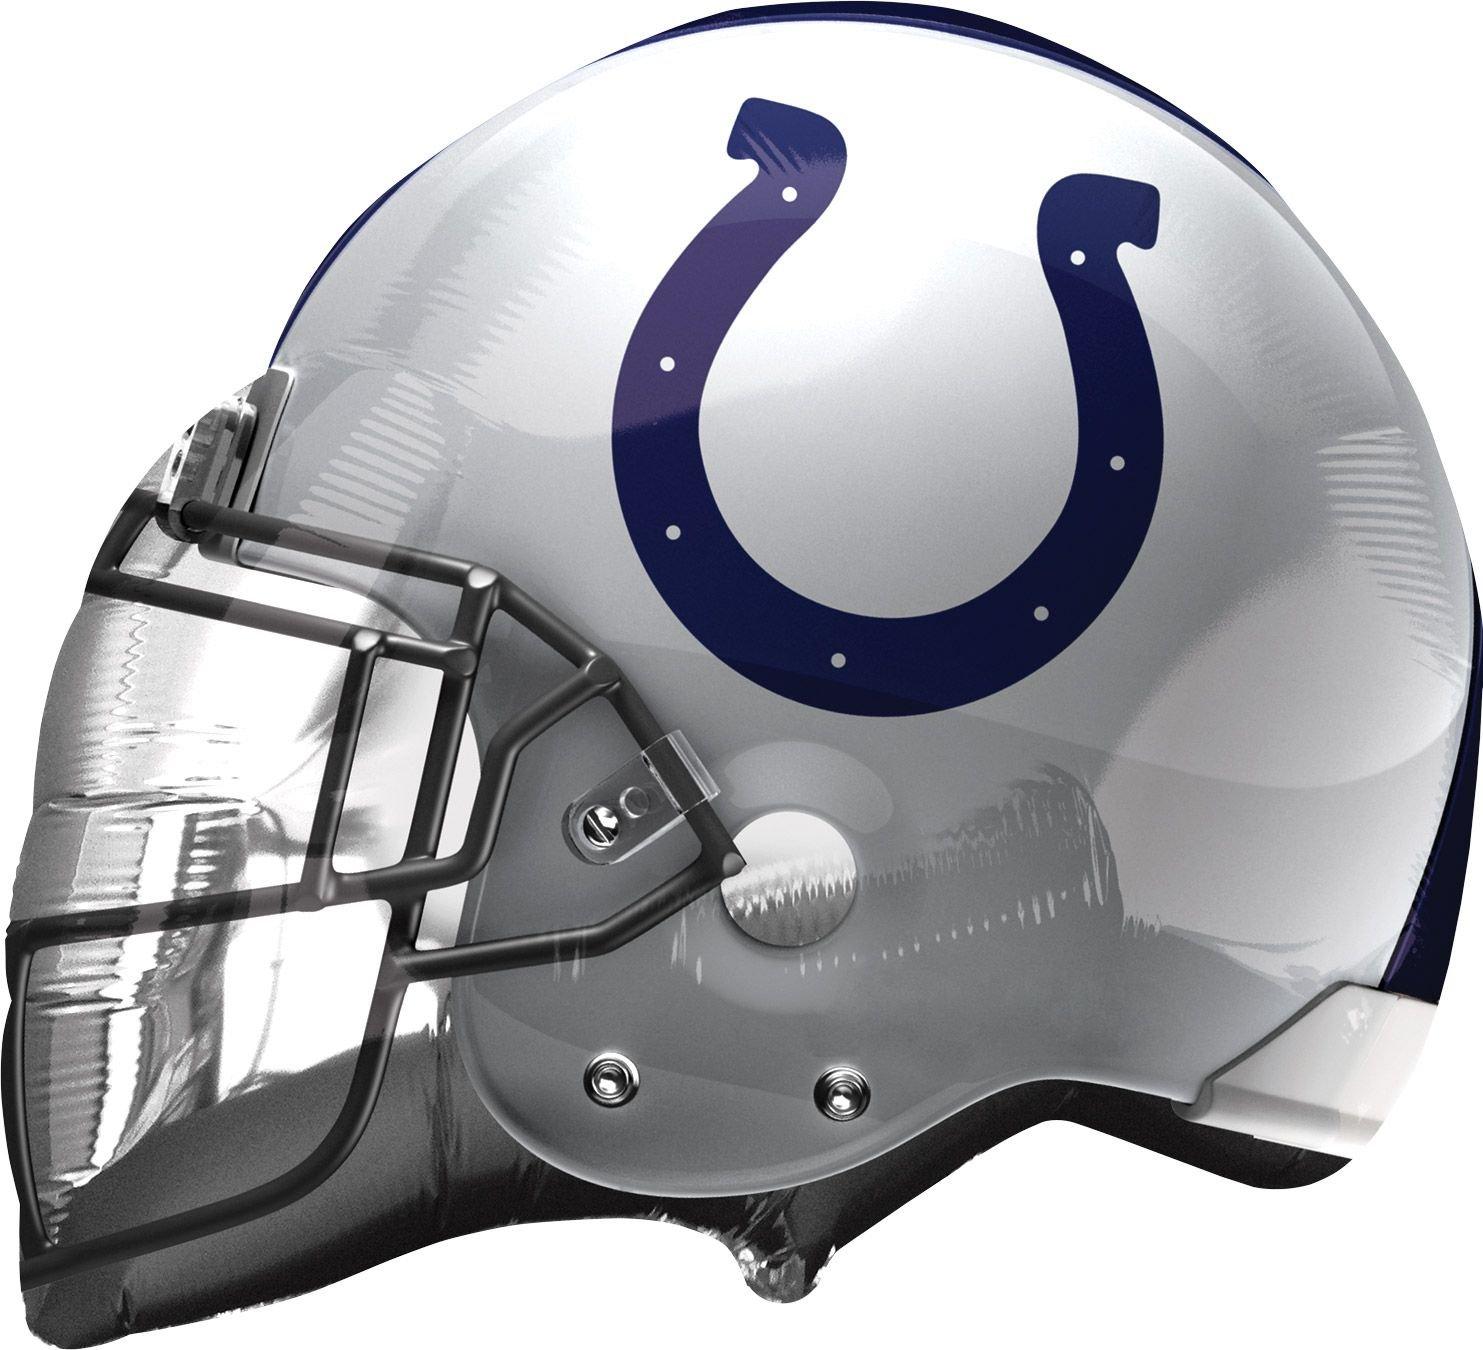 Indianapolis Colts Balloon - Helmet